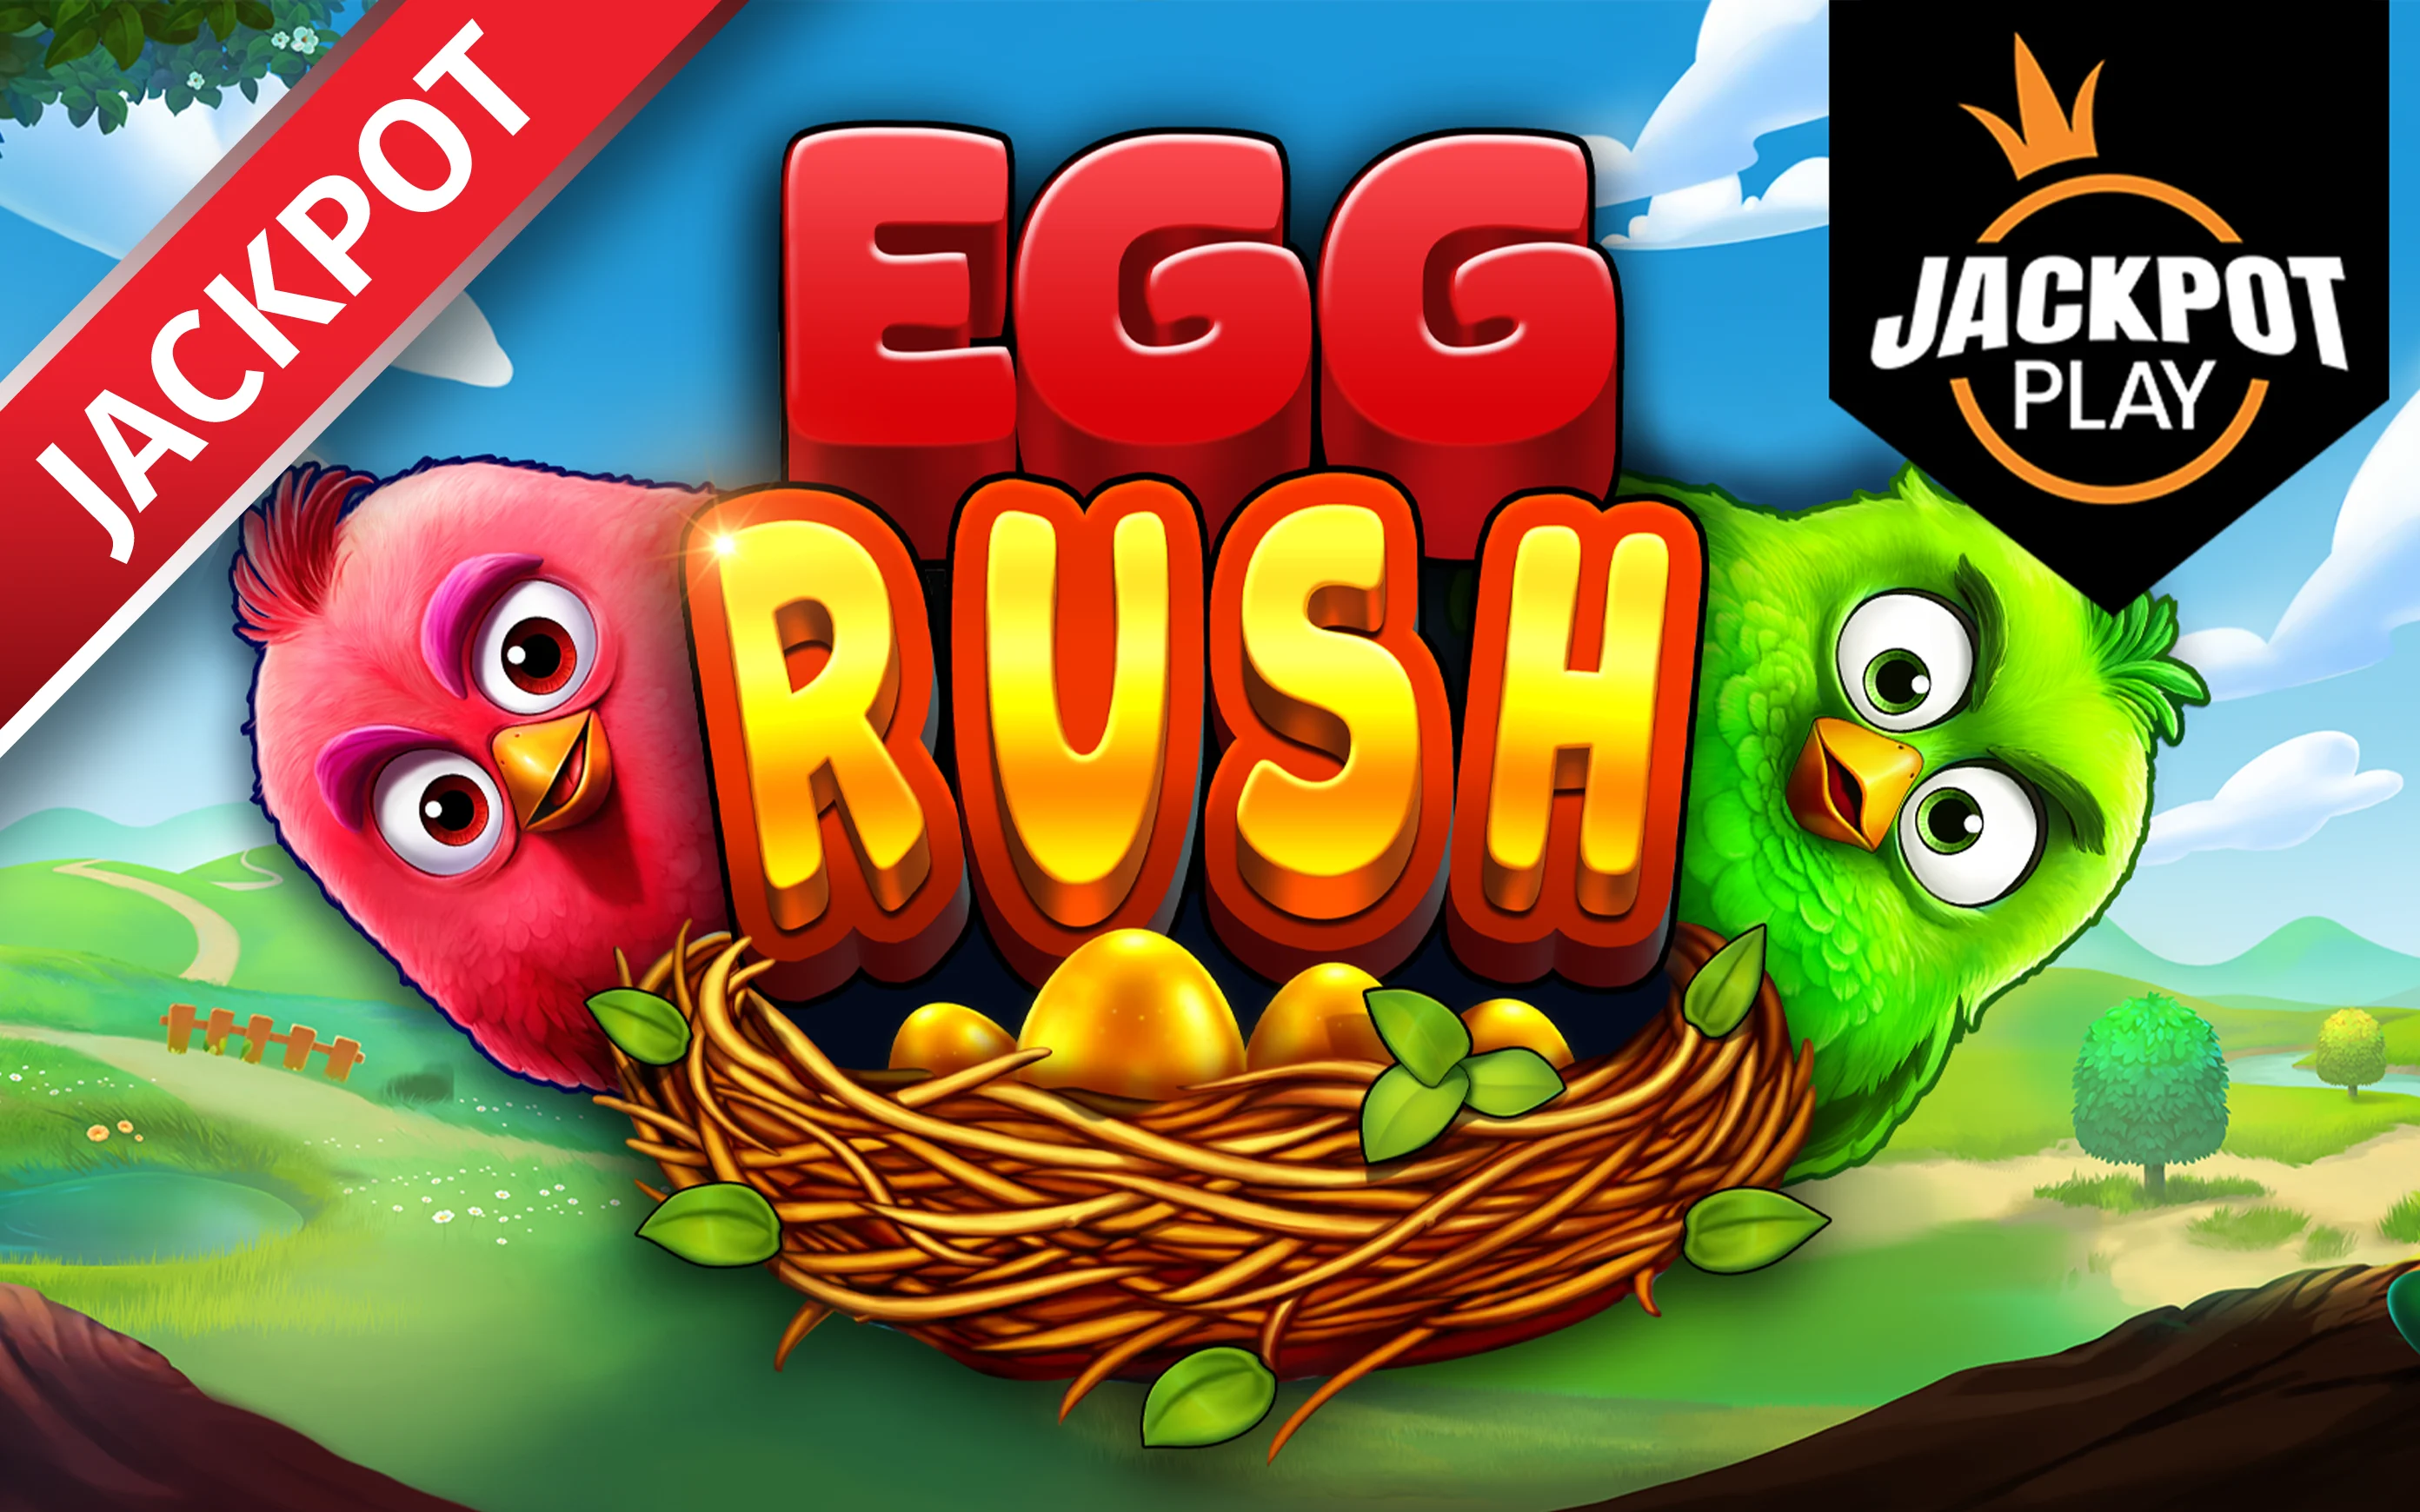 Грайте у Egg Rush Jackpot Play в онлайн-казино Starcasino.be